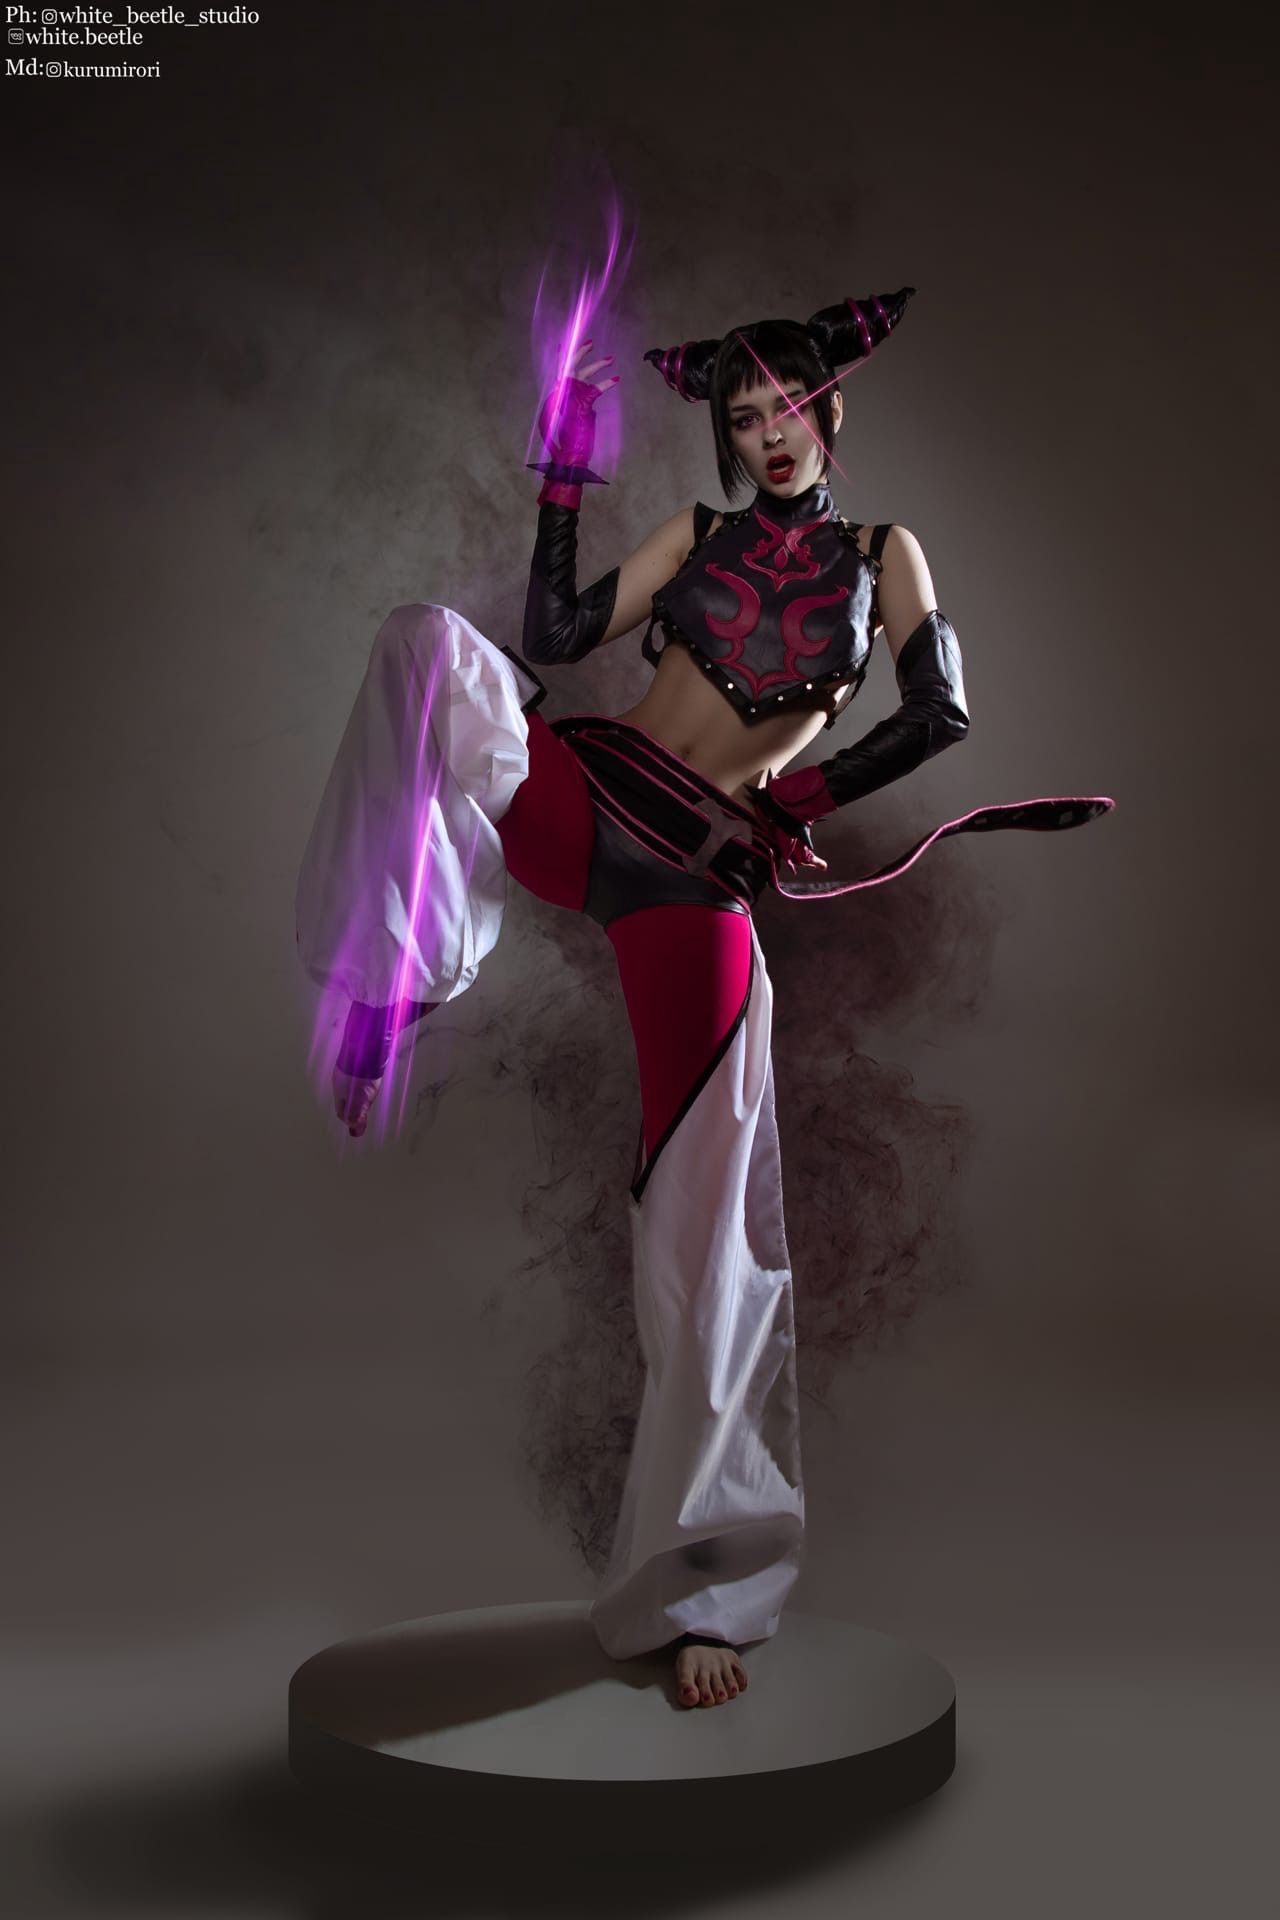 Косплей на Джури из Street Fighter &mdash; богиня тхэквондо. Косплеер: mars. 火星. Фотограф: white beetle. Источник: vk.com/kurumirori